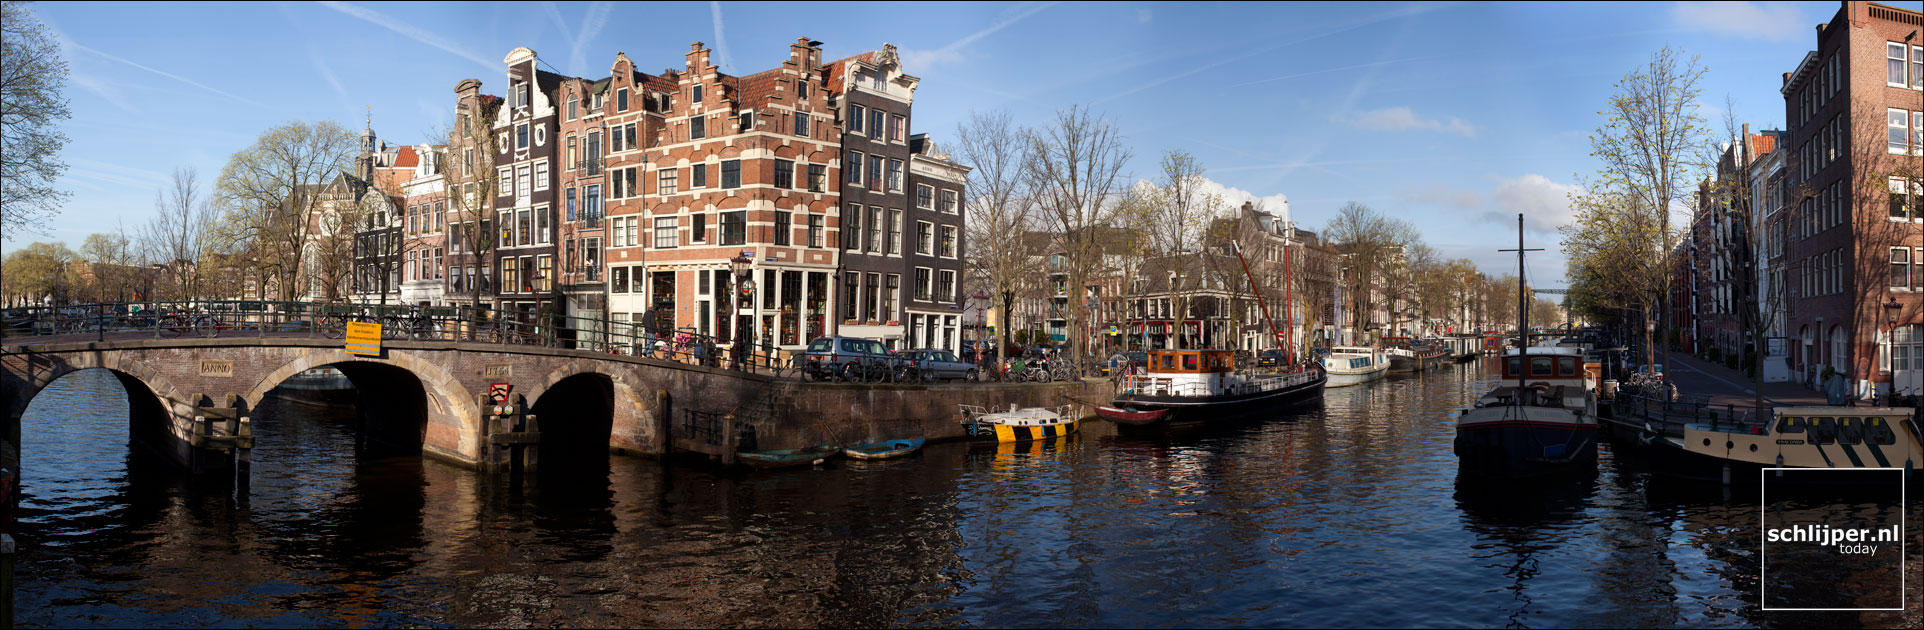 Nederland, Amsterdam, 1 april 2012